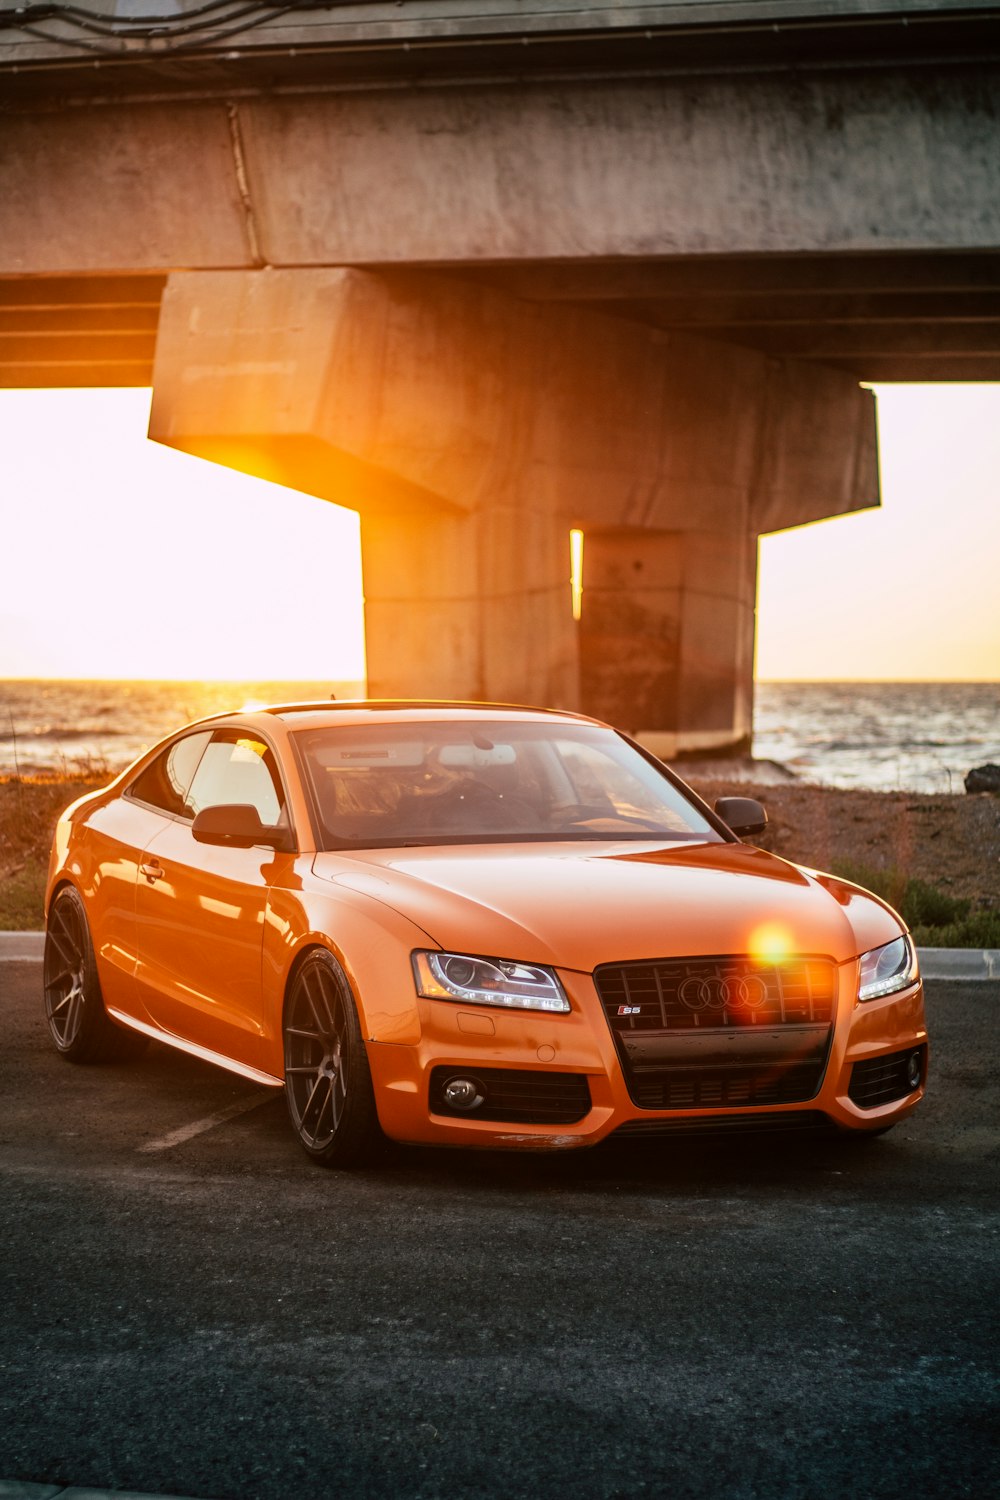 Audi cupê laranja estacionado em estrada de concreto cinza